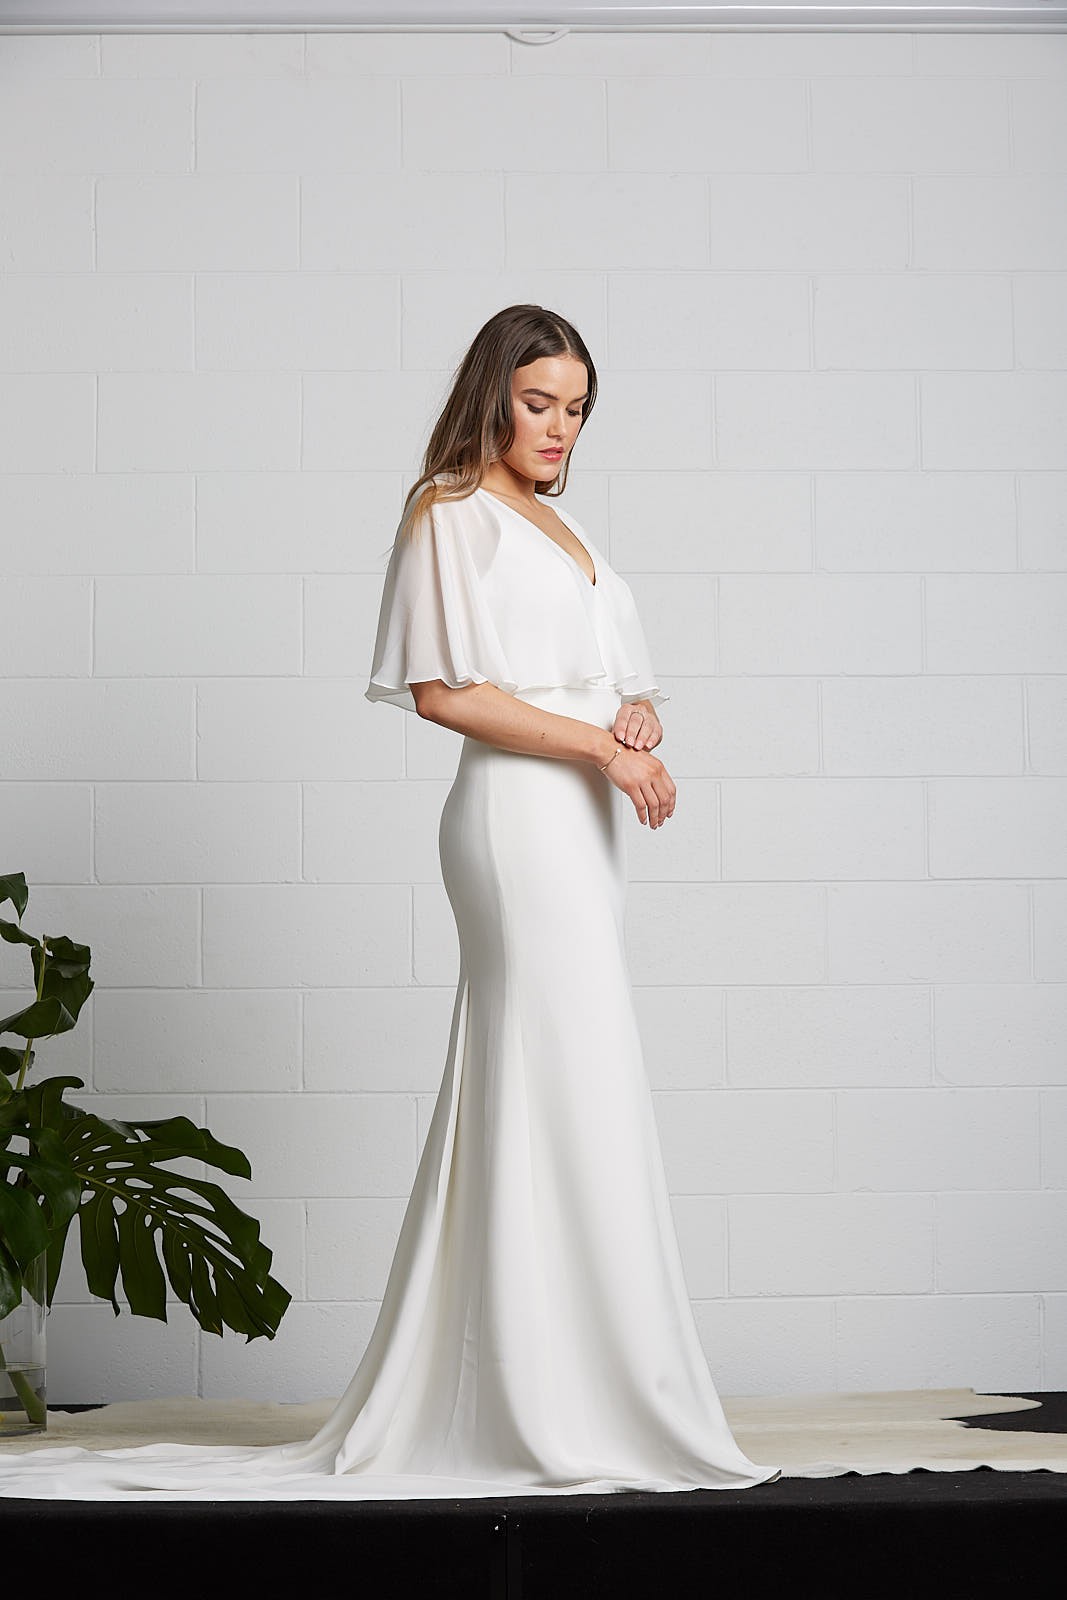 Fiona Claire Admire Sample Wedding Dress Save 72% - Stillwhite